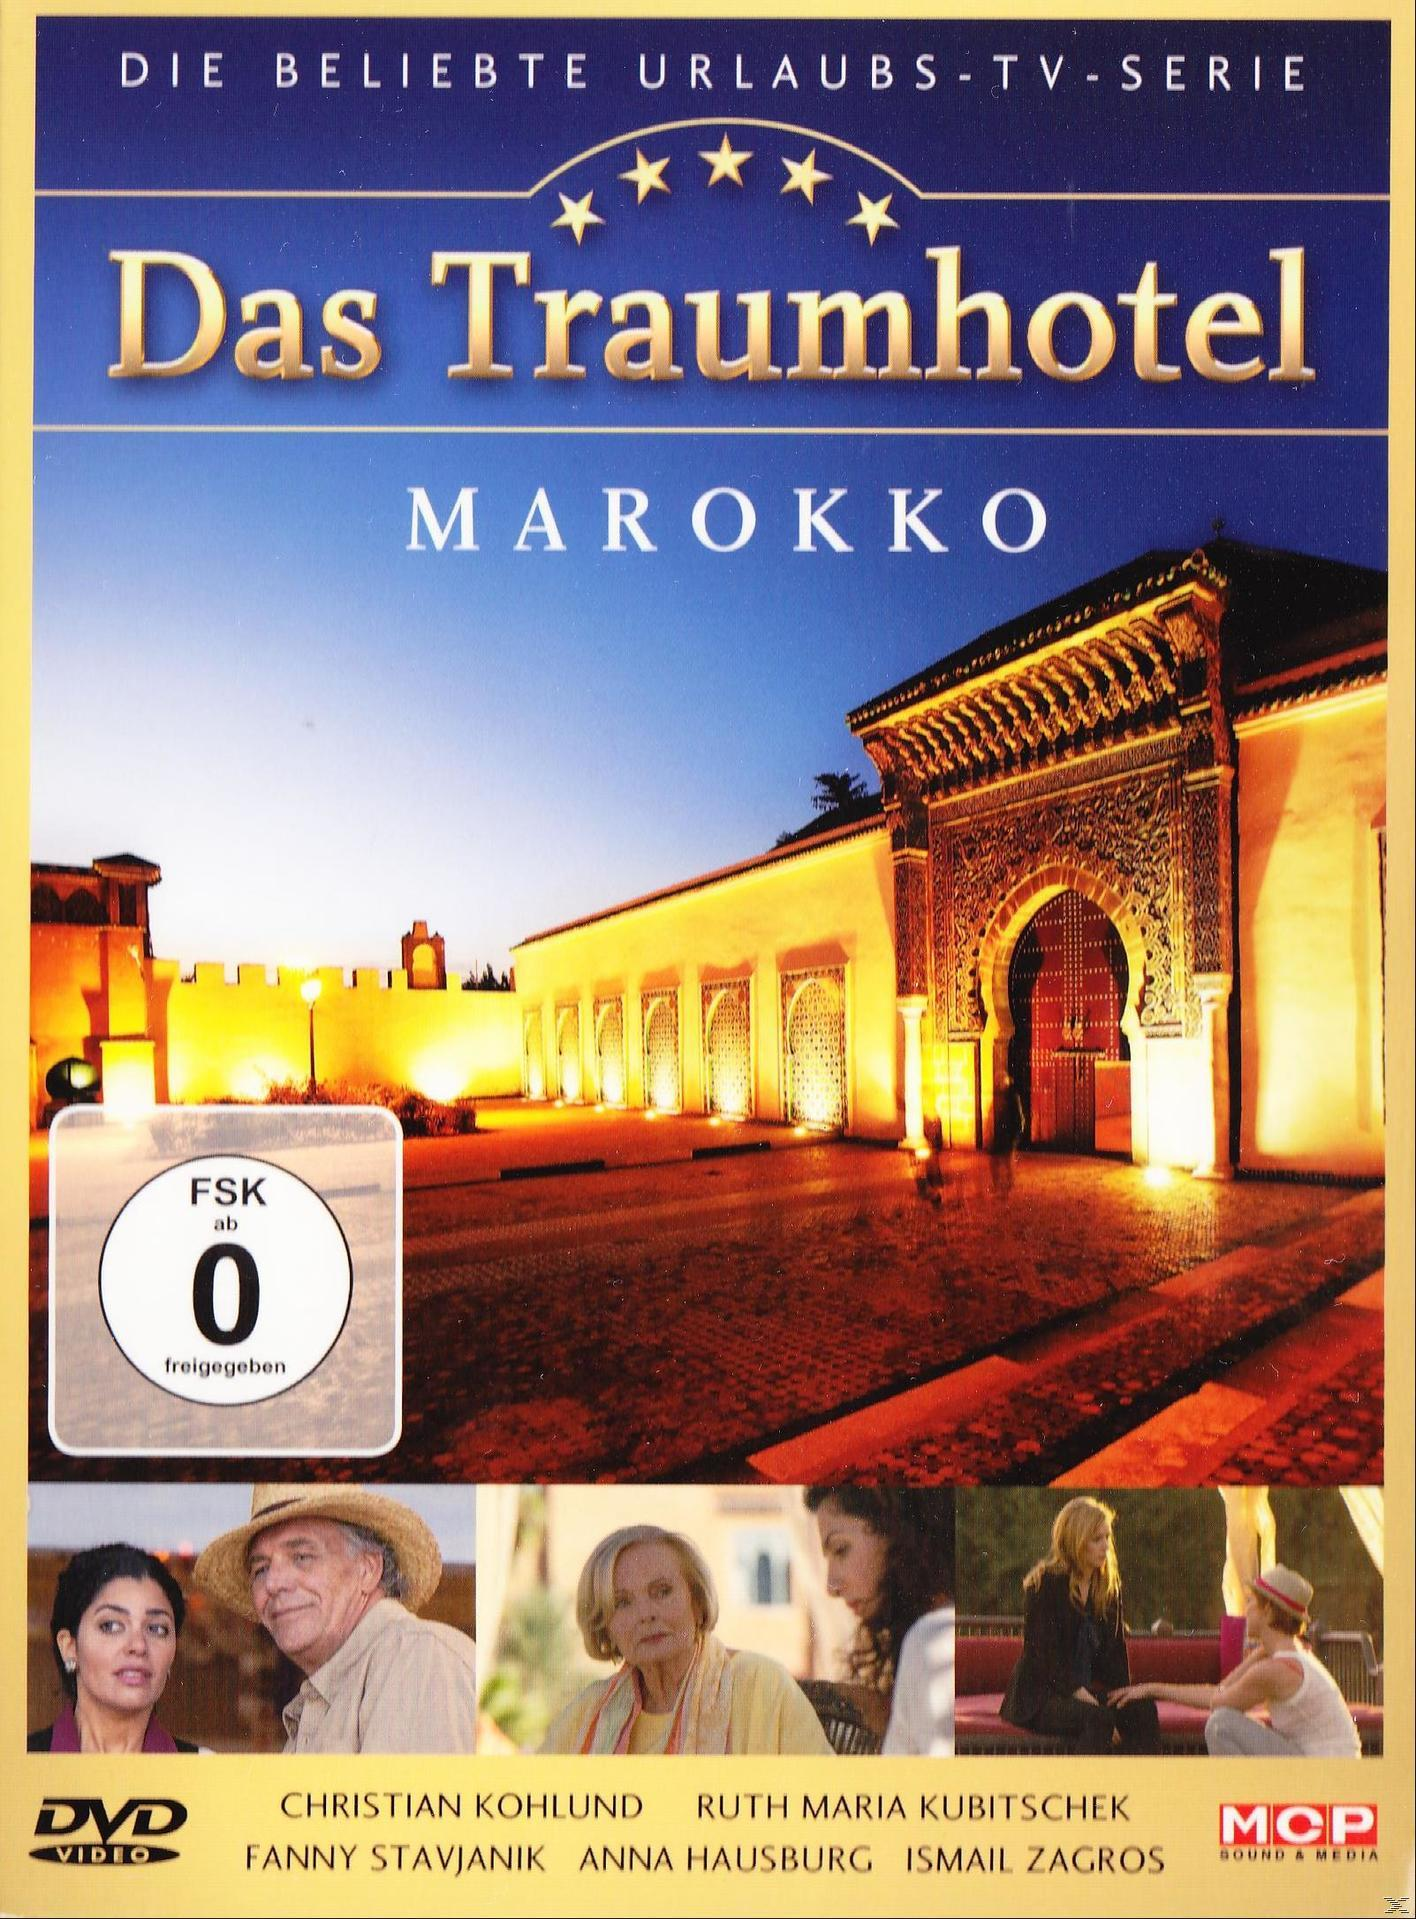 Marokko DVD Traumhotel - Das